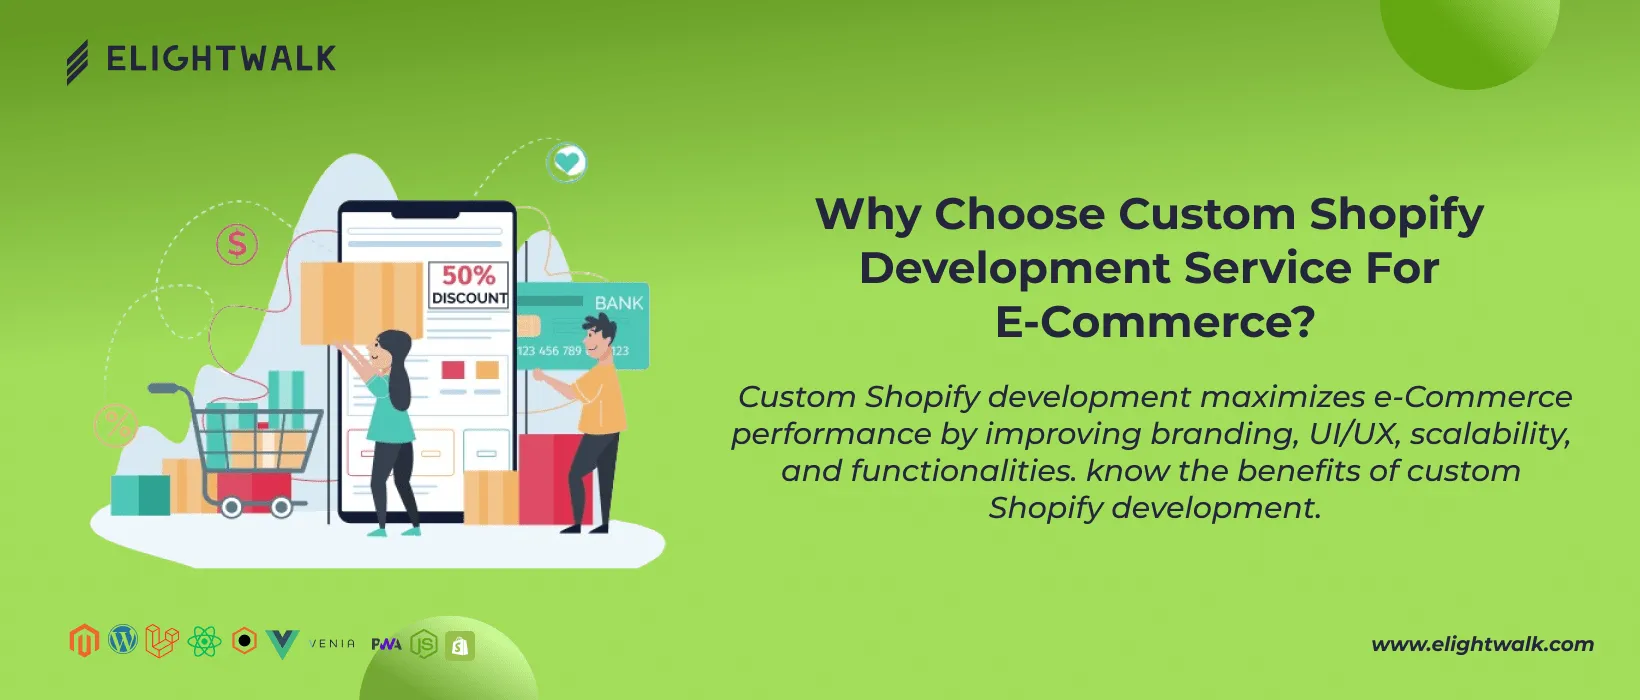 Why Choose Custom Shopify Development Service for E-commerce